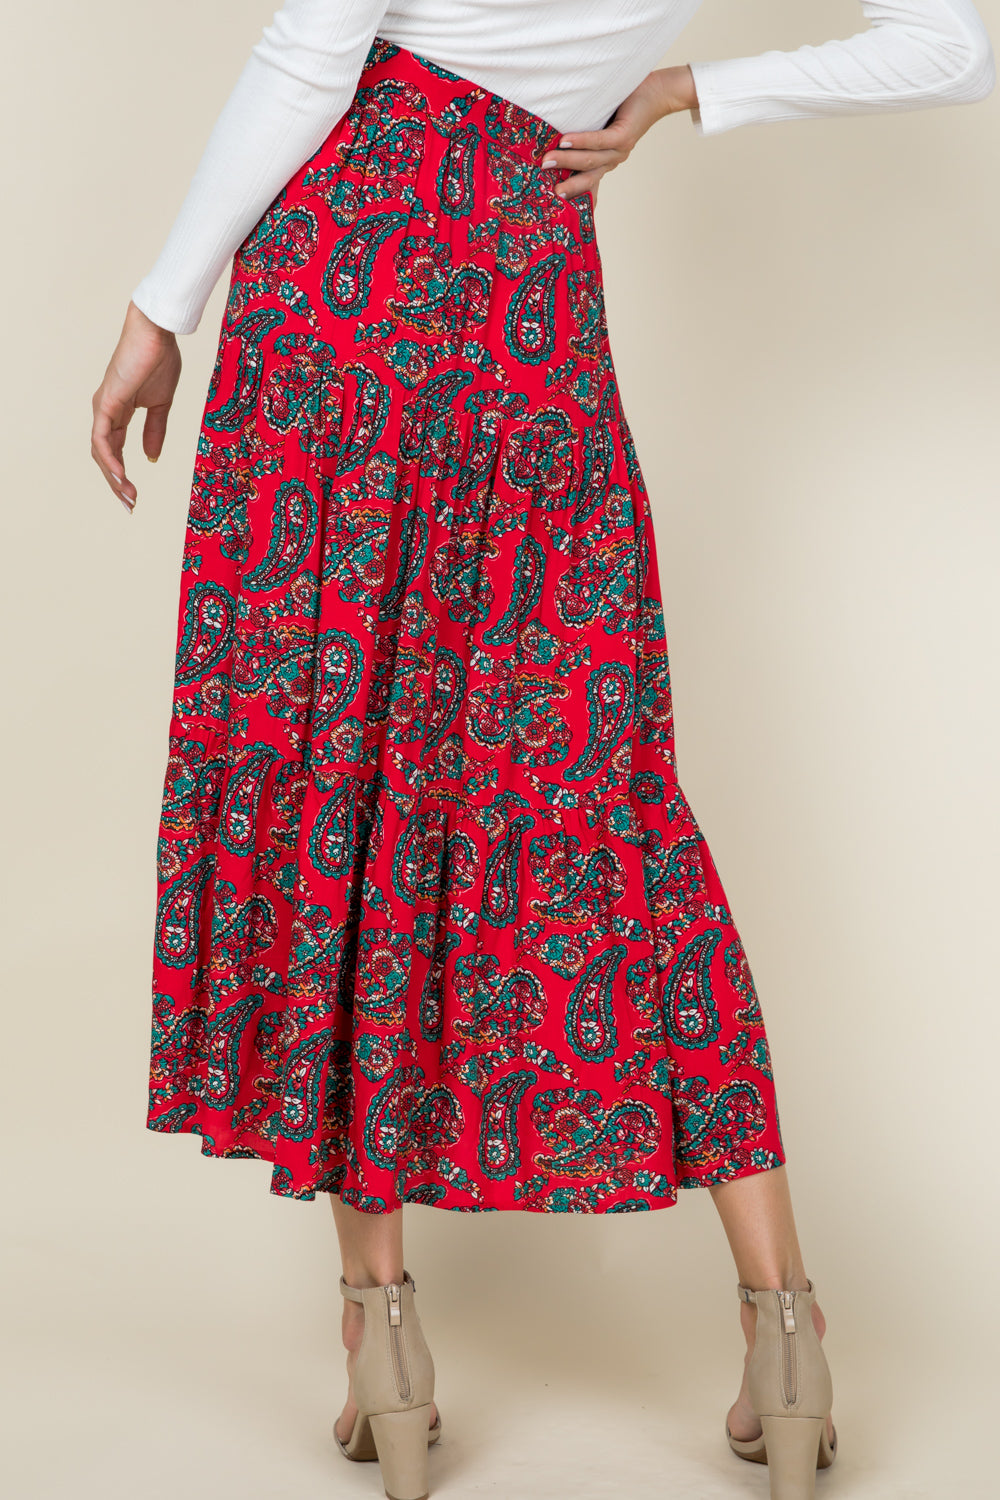 [$4/piece] Paisley tiered skirt